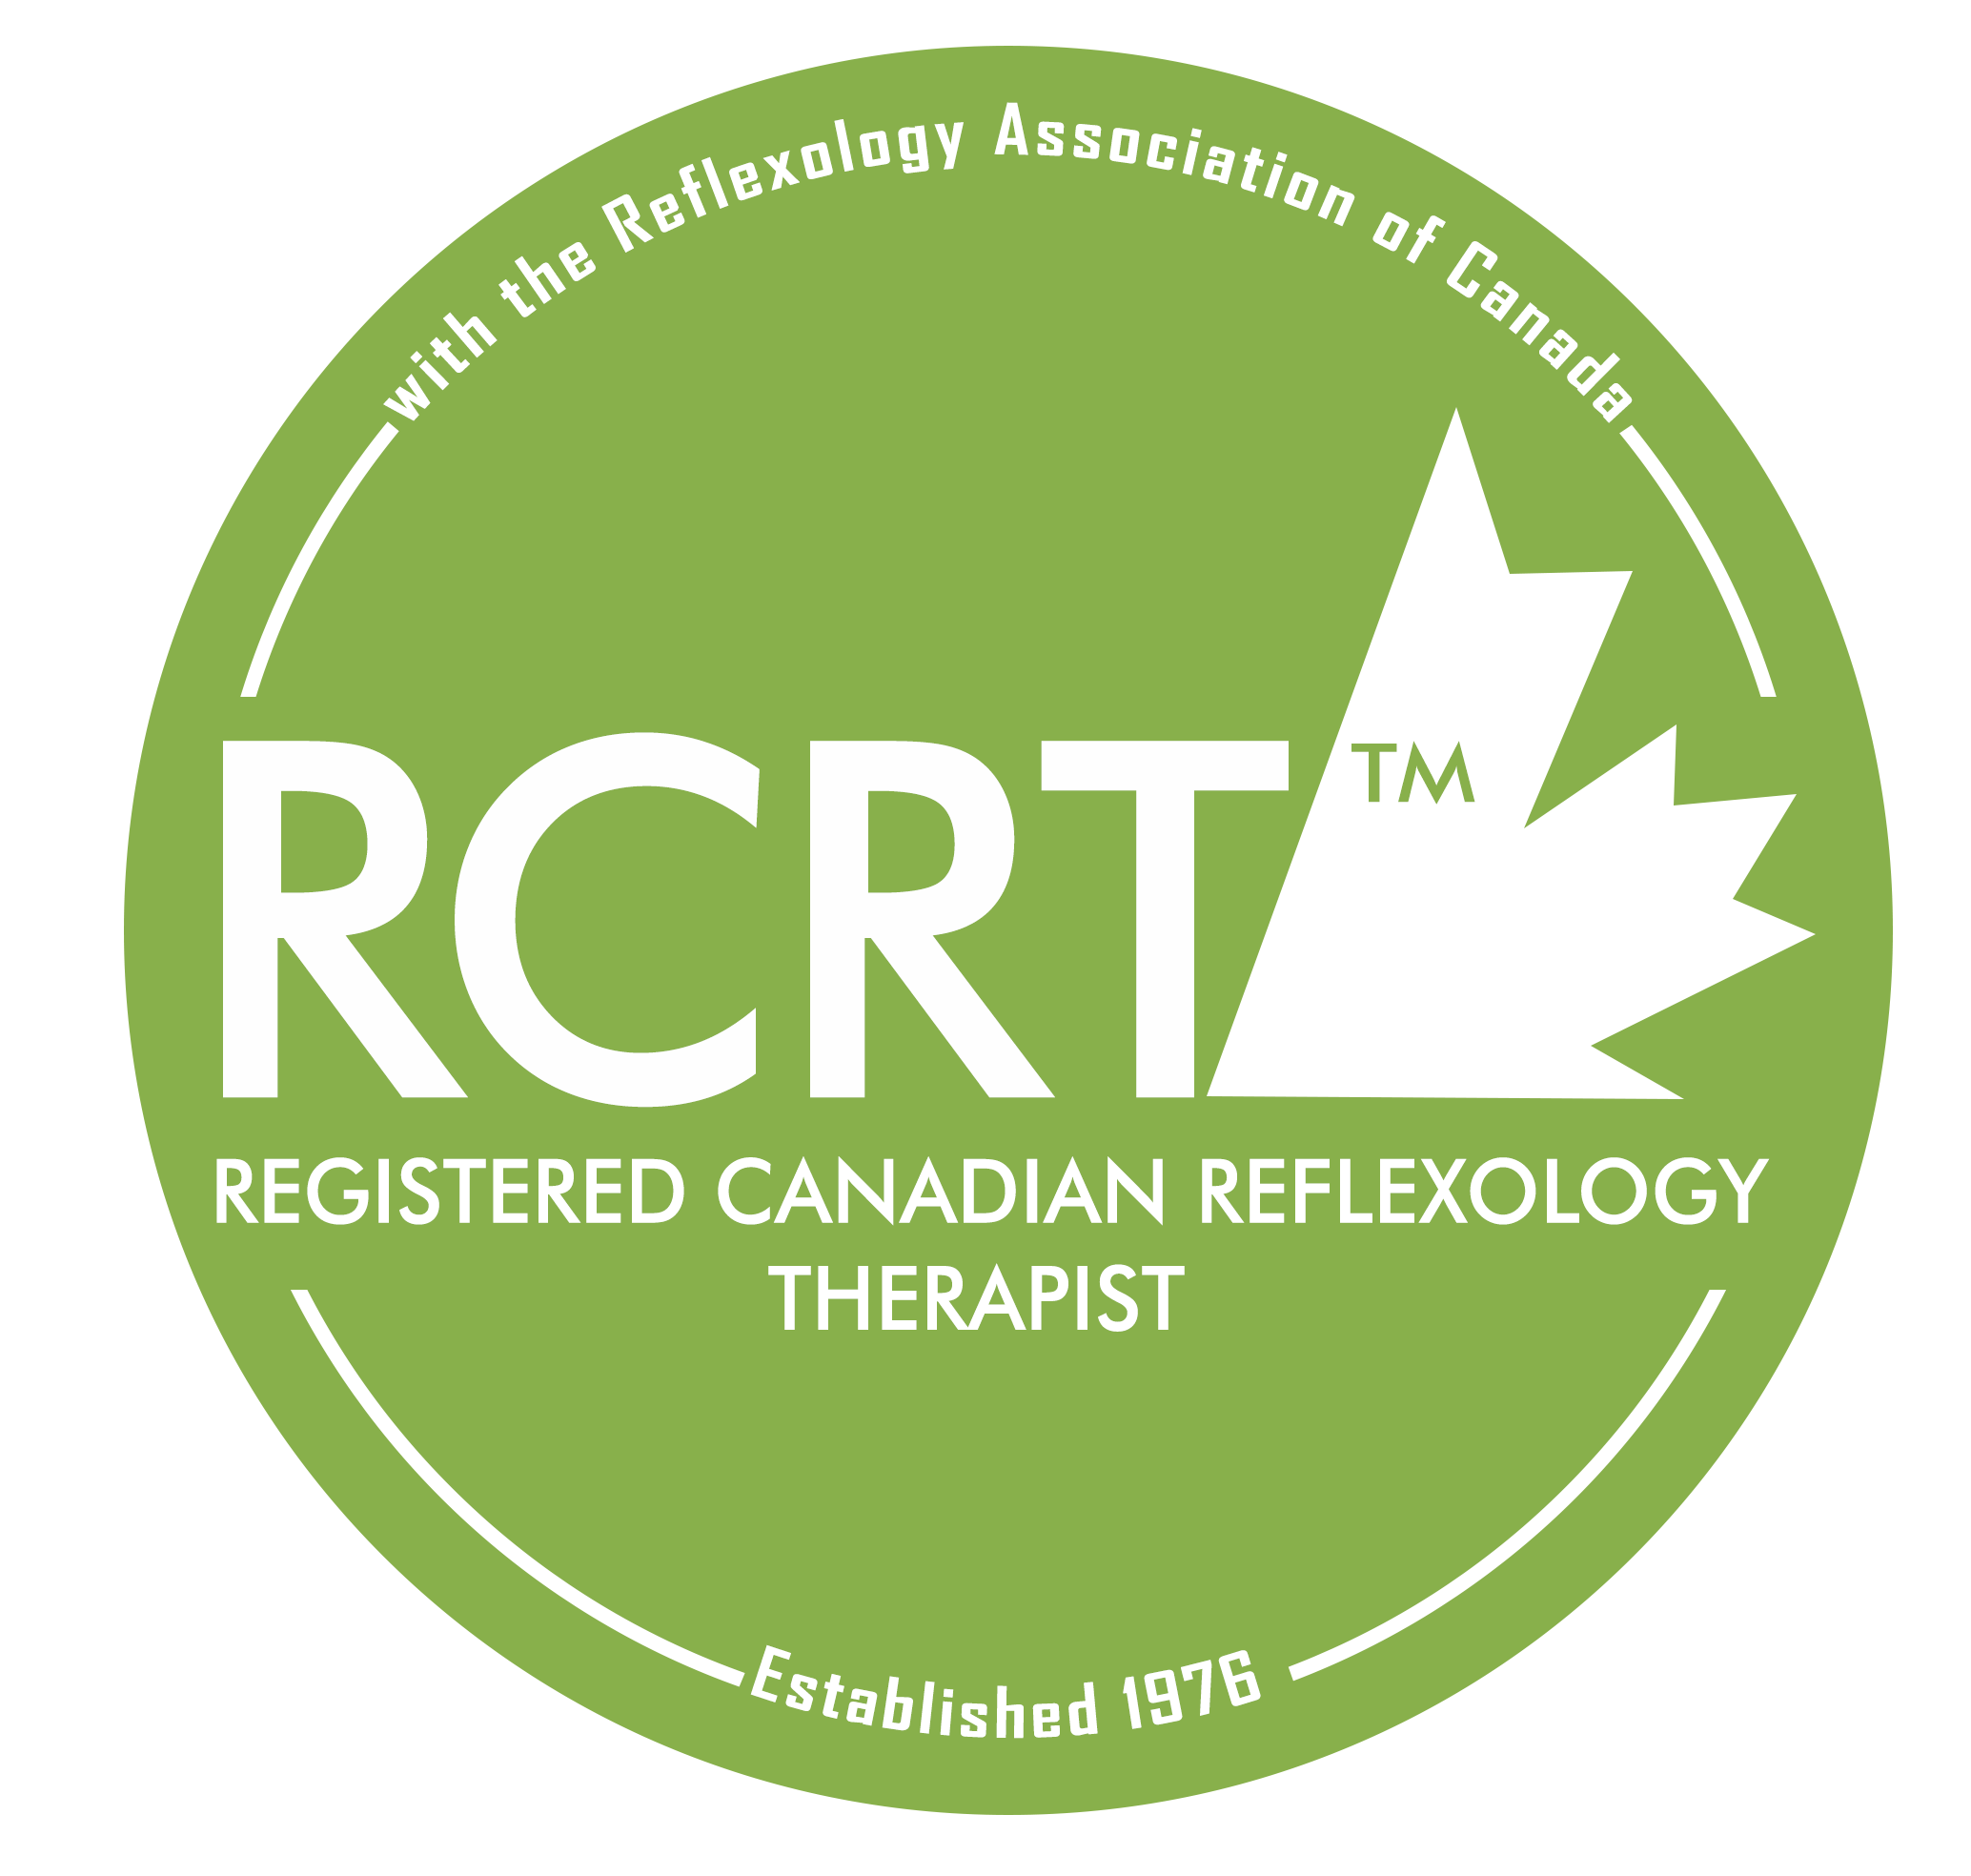 Reflexology Association of British Columbia logo